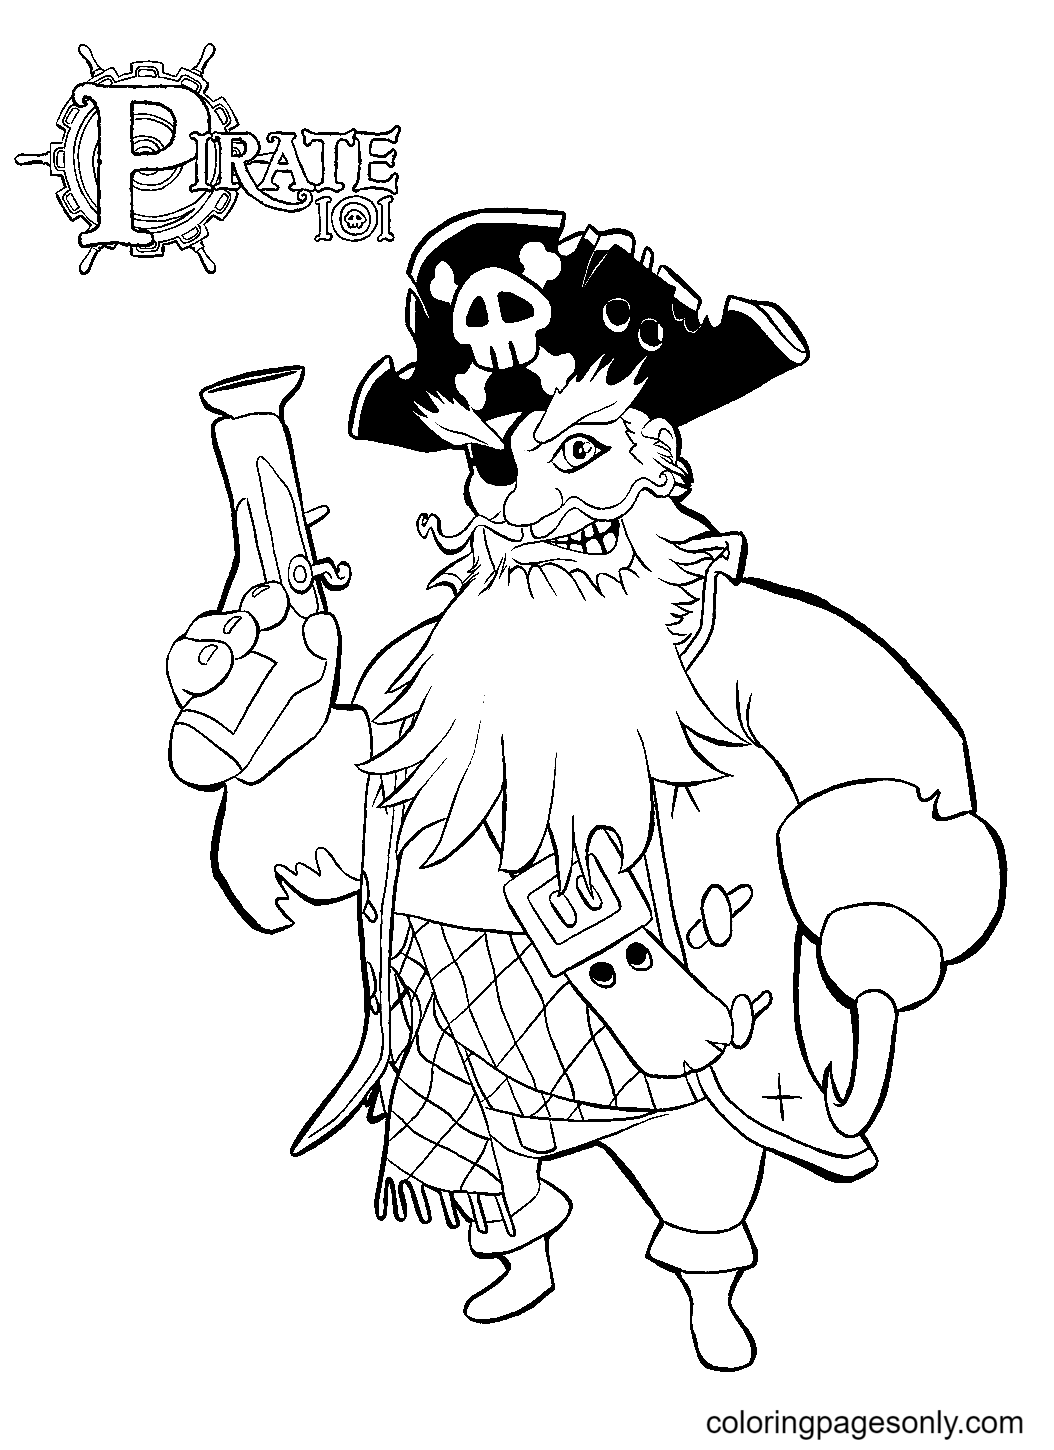 Страшный пират из пирата